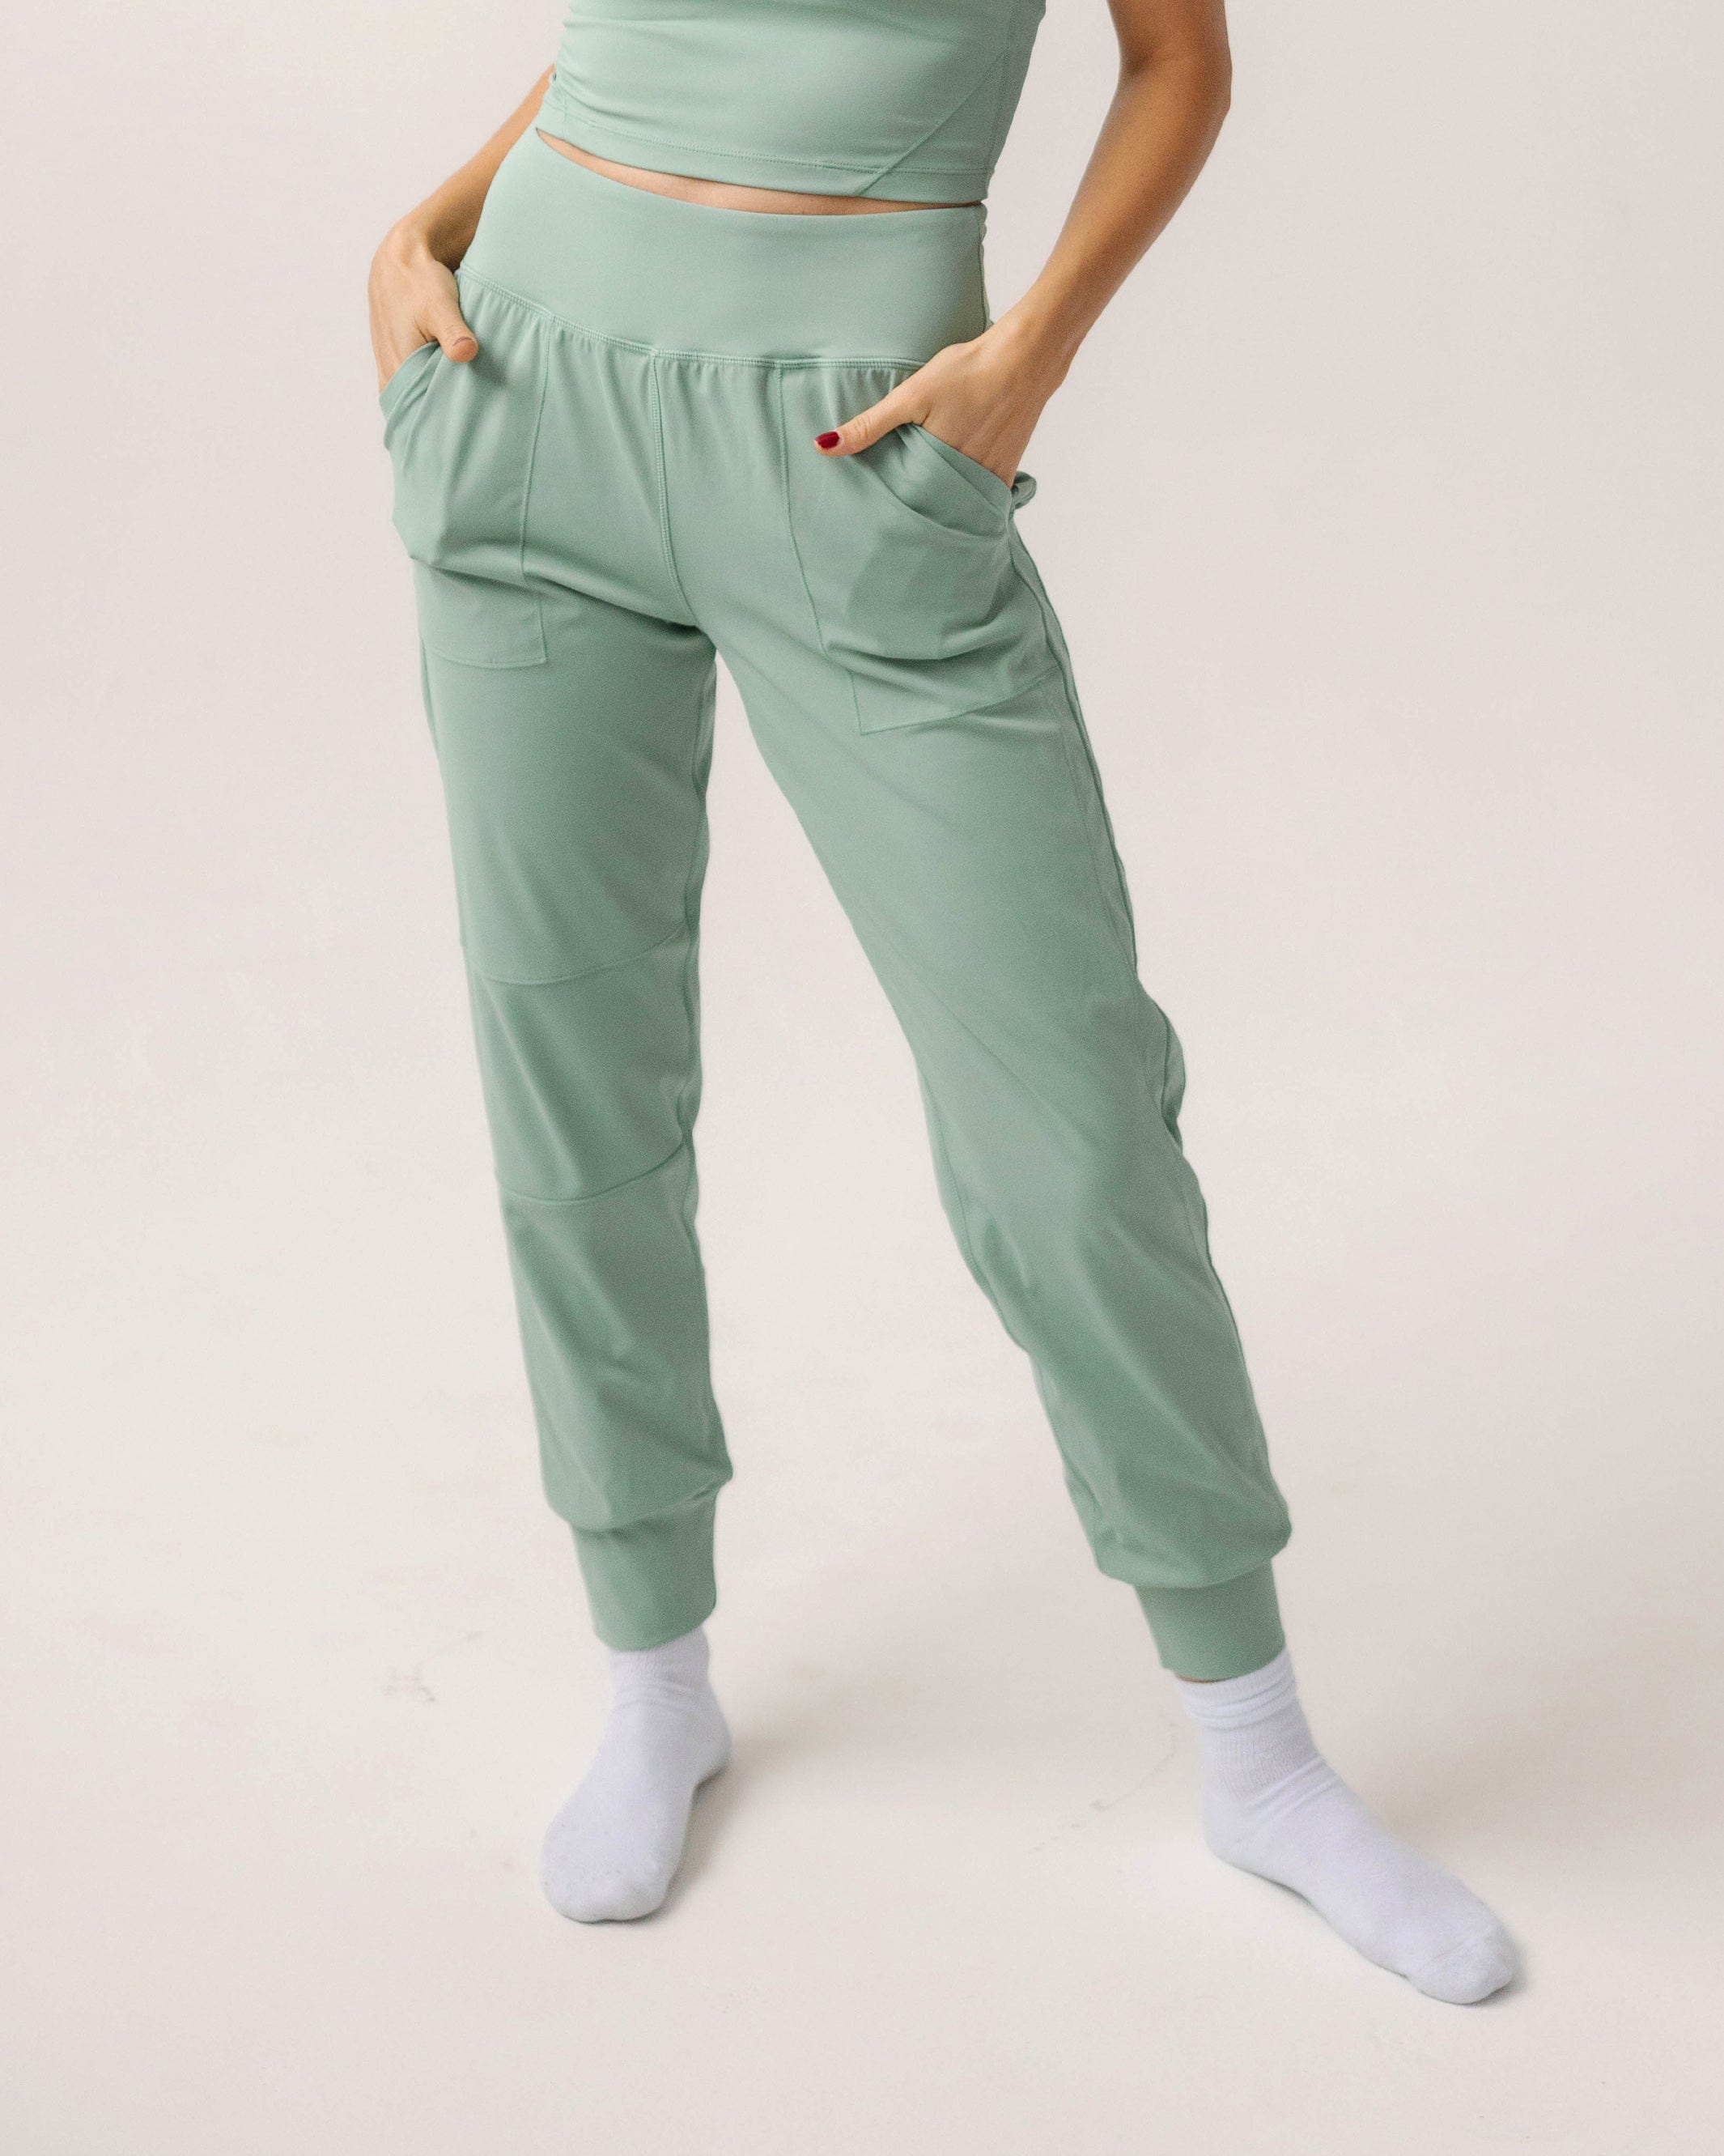 Super Soft Jogger - Trek Green  Women's Trousers & Yoga Pants